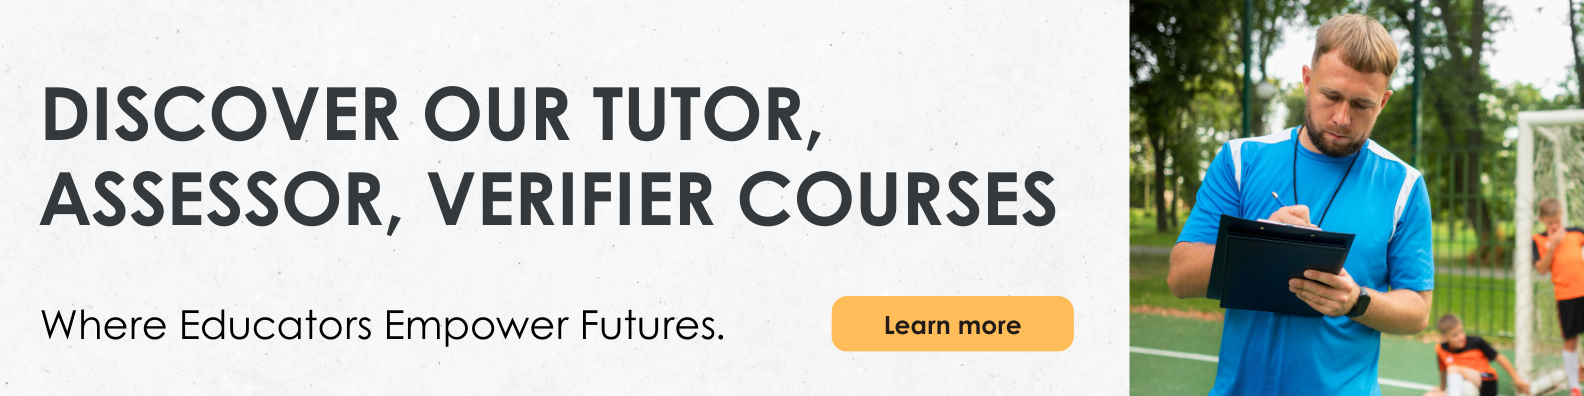 Discover our tutor, assessor and verifier courses